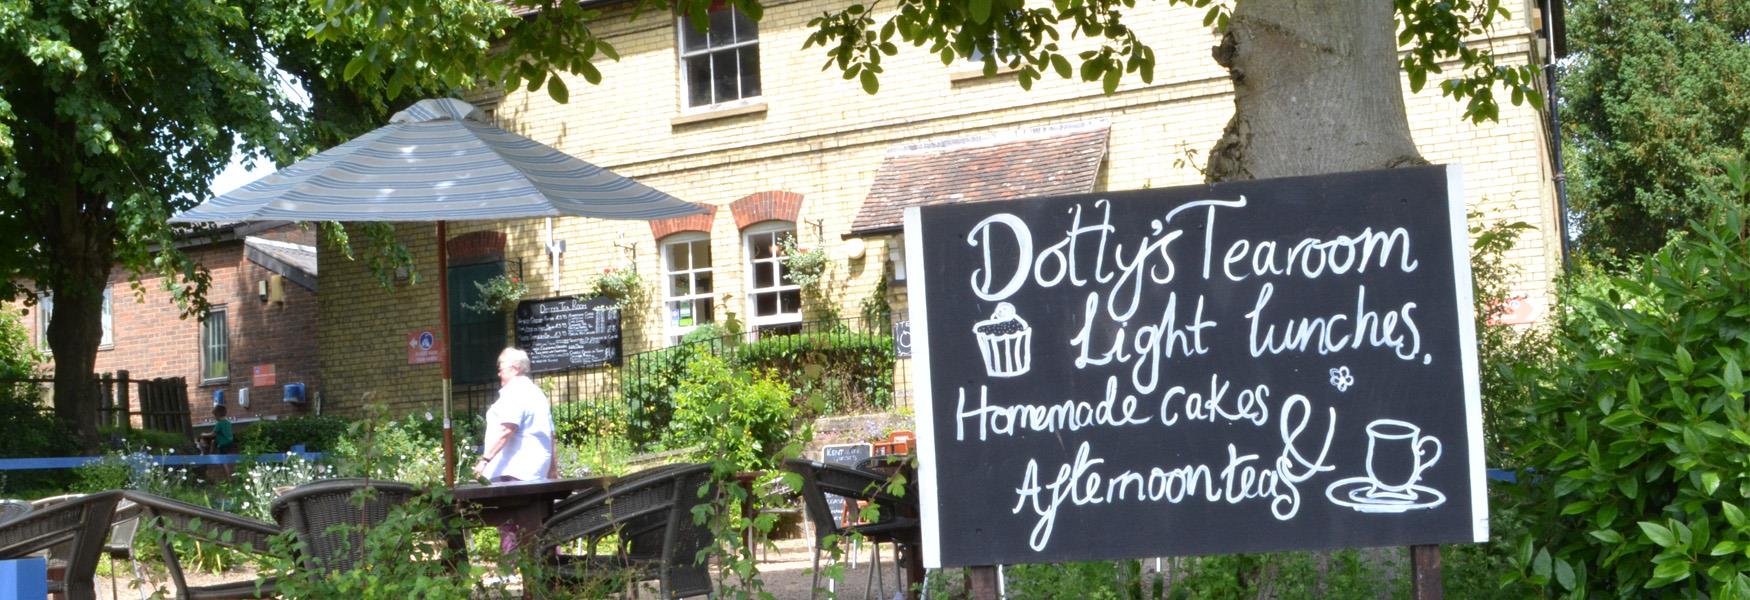 Dotty's Tea Room at Kent Life